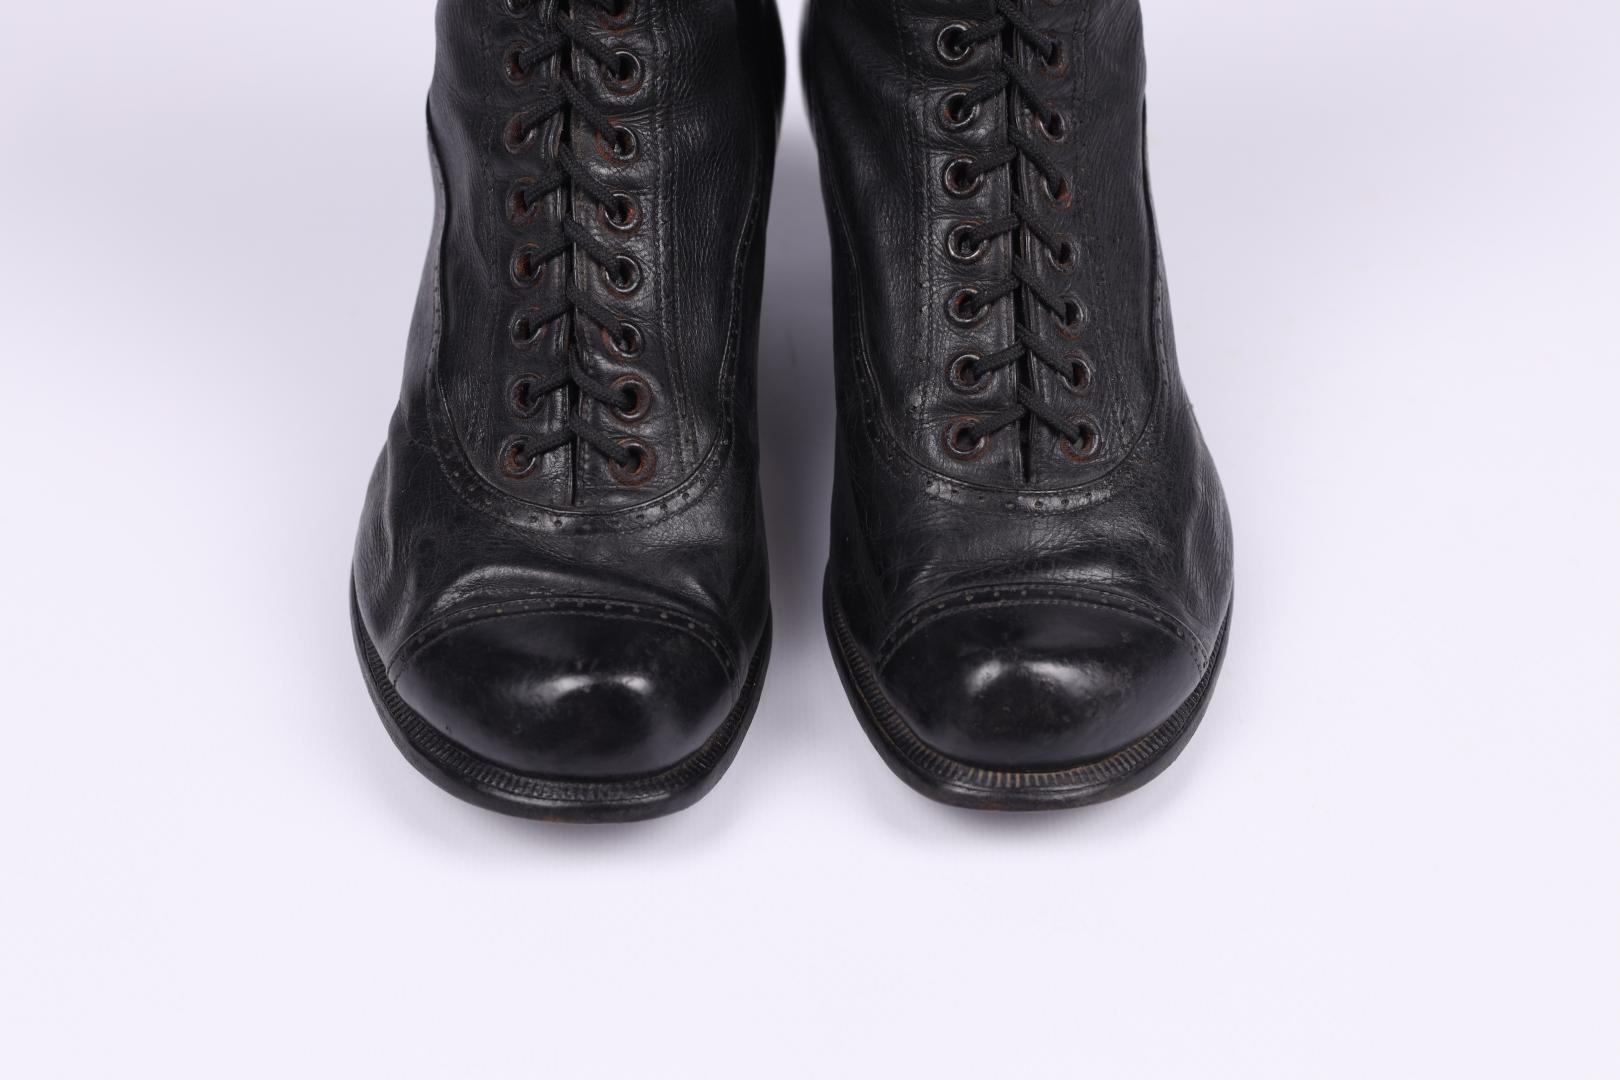 Festive lace-up women's boots